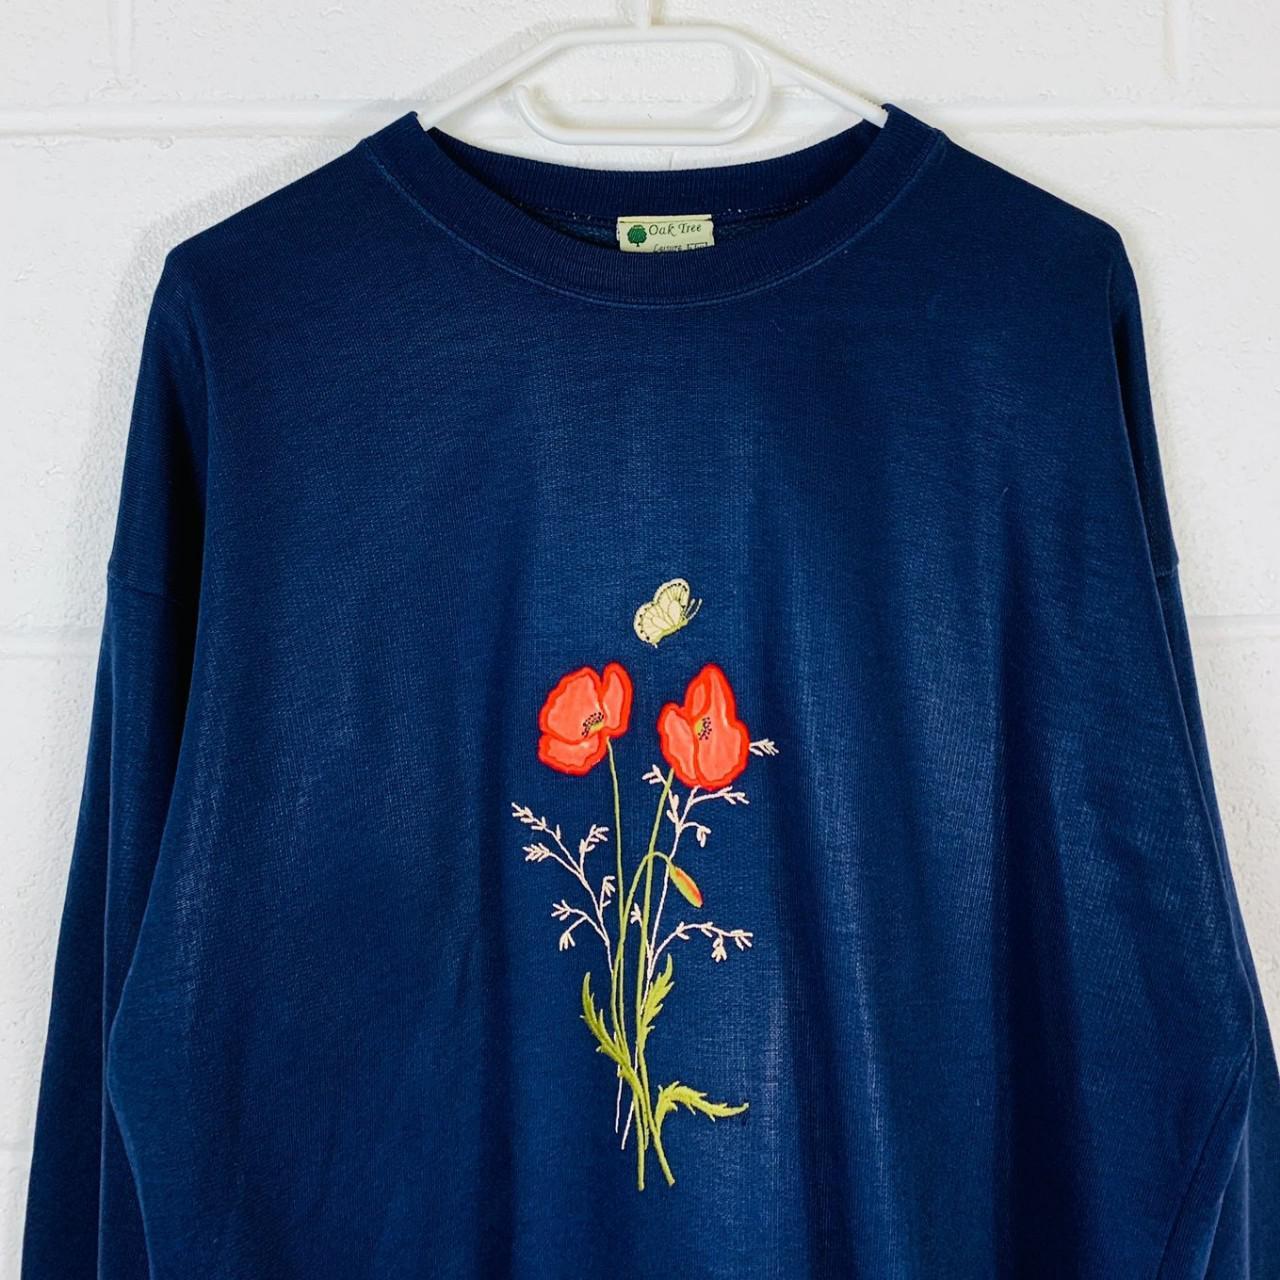 Women's Blue and Navy Sweatshirt